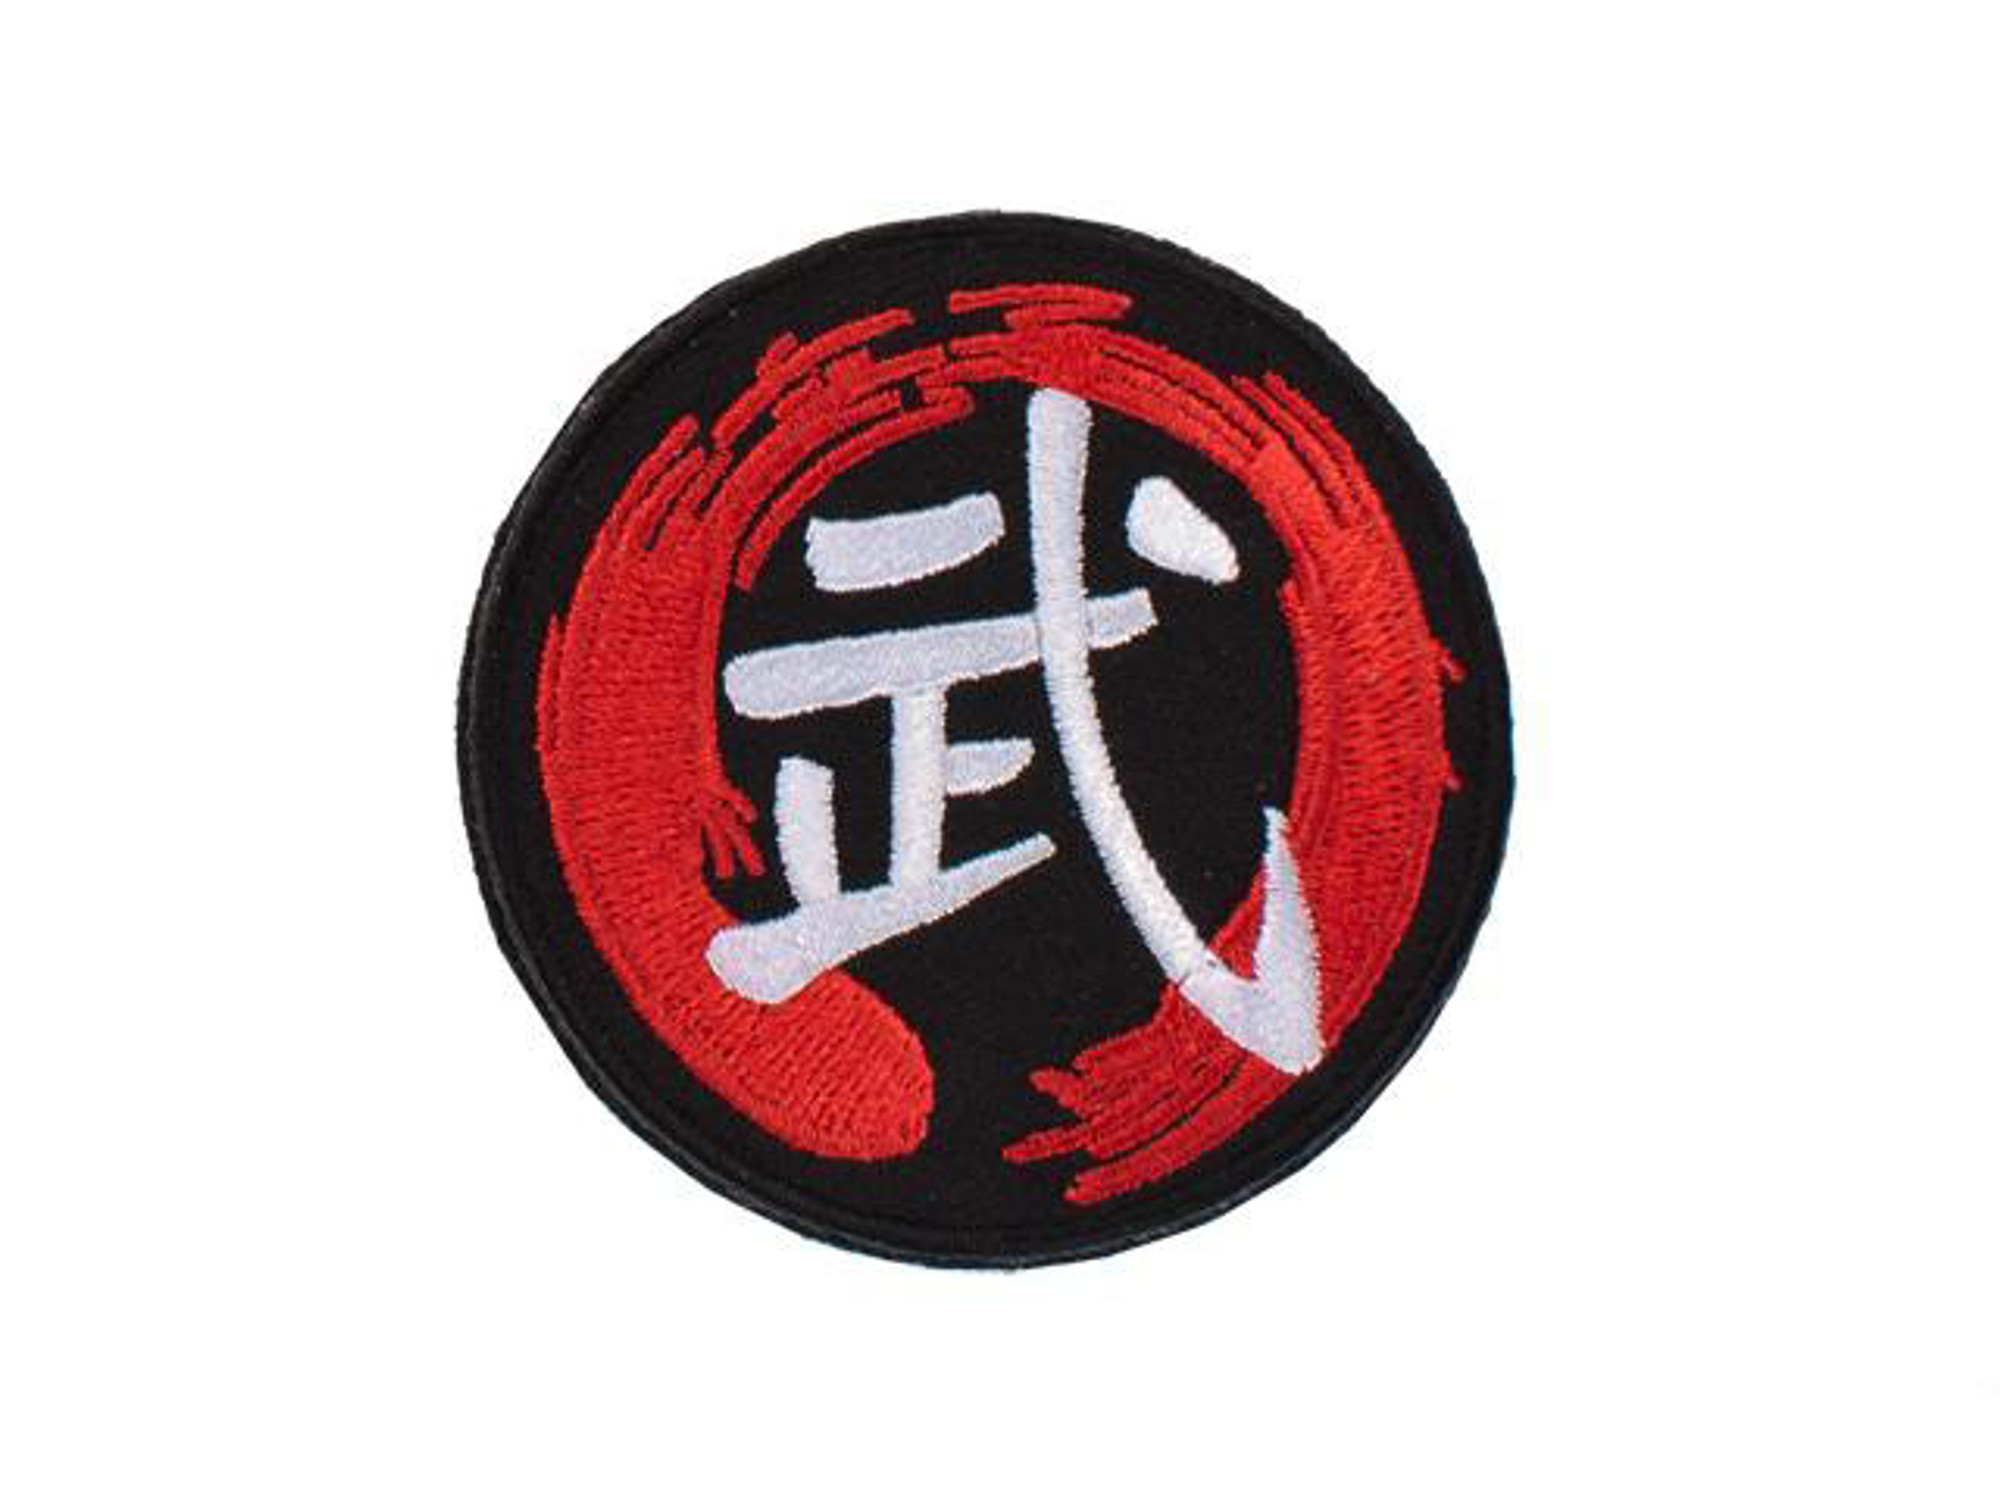 Matrix "Martial Art" IFF Hook and Loop Patch - Wushu